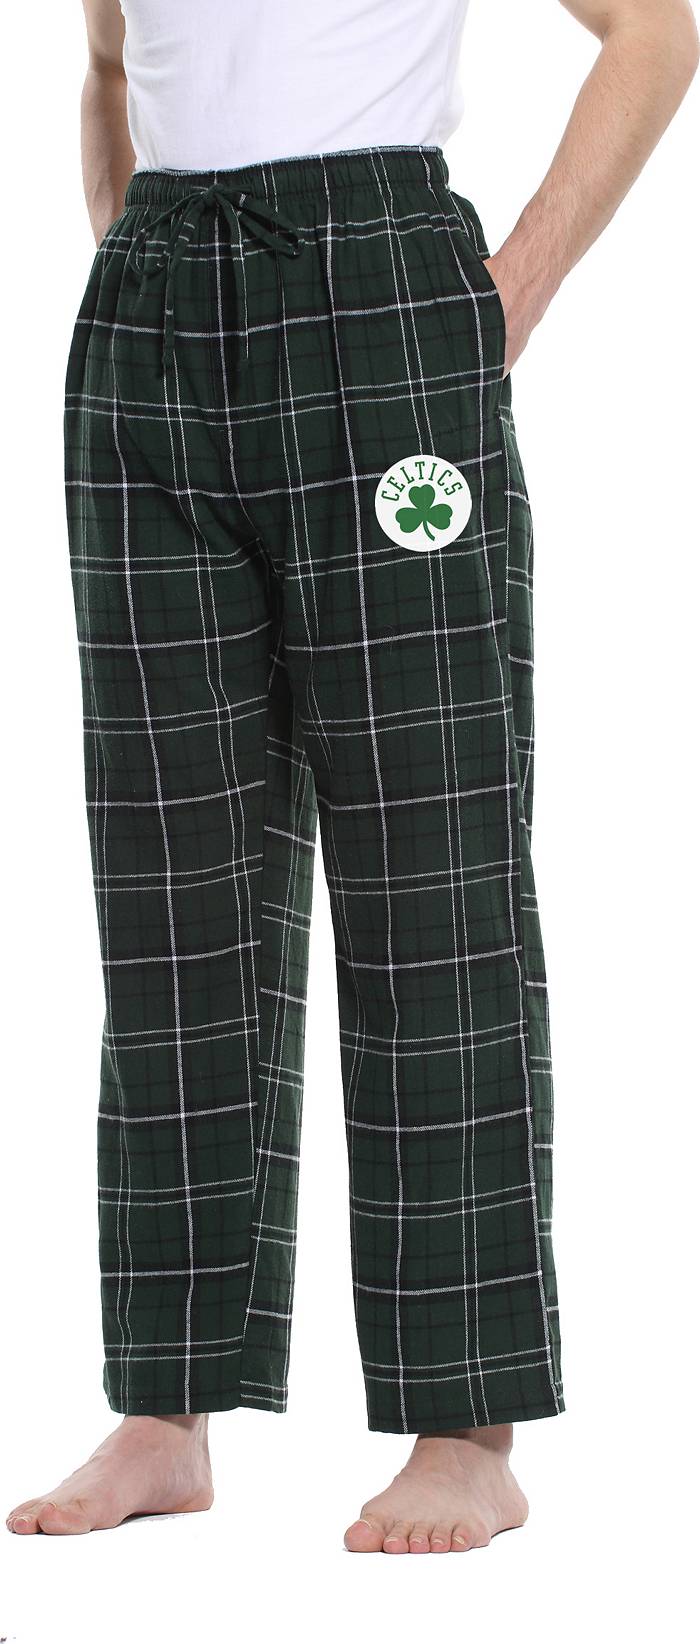 Women's Concepts Sport Gray Boston Celtics Cedar Long Sleeve T-Shirt & Shorts Sleep Set Size: Large